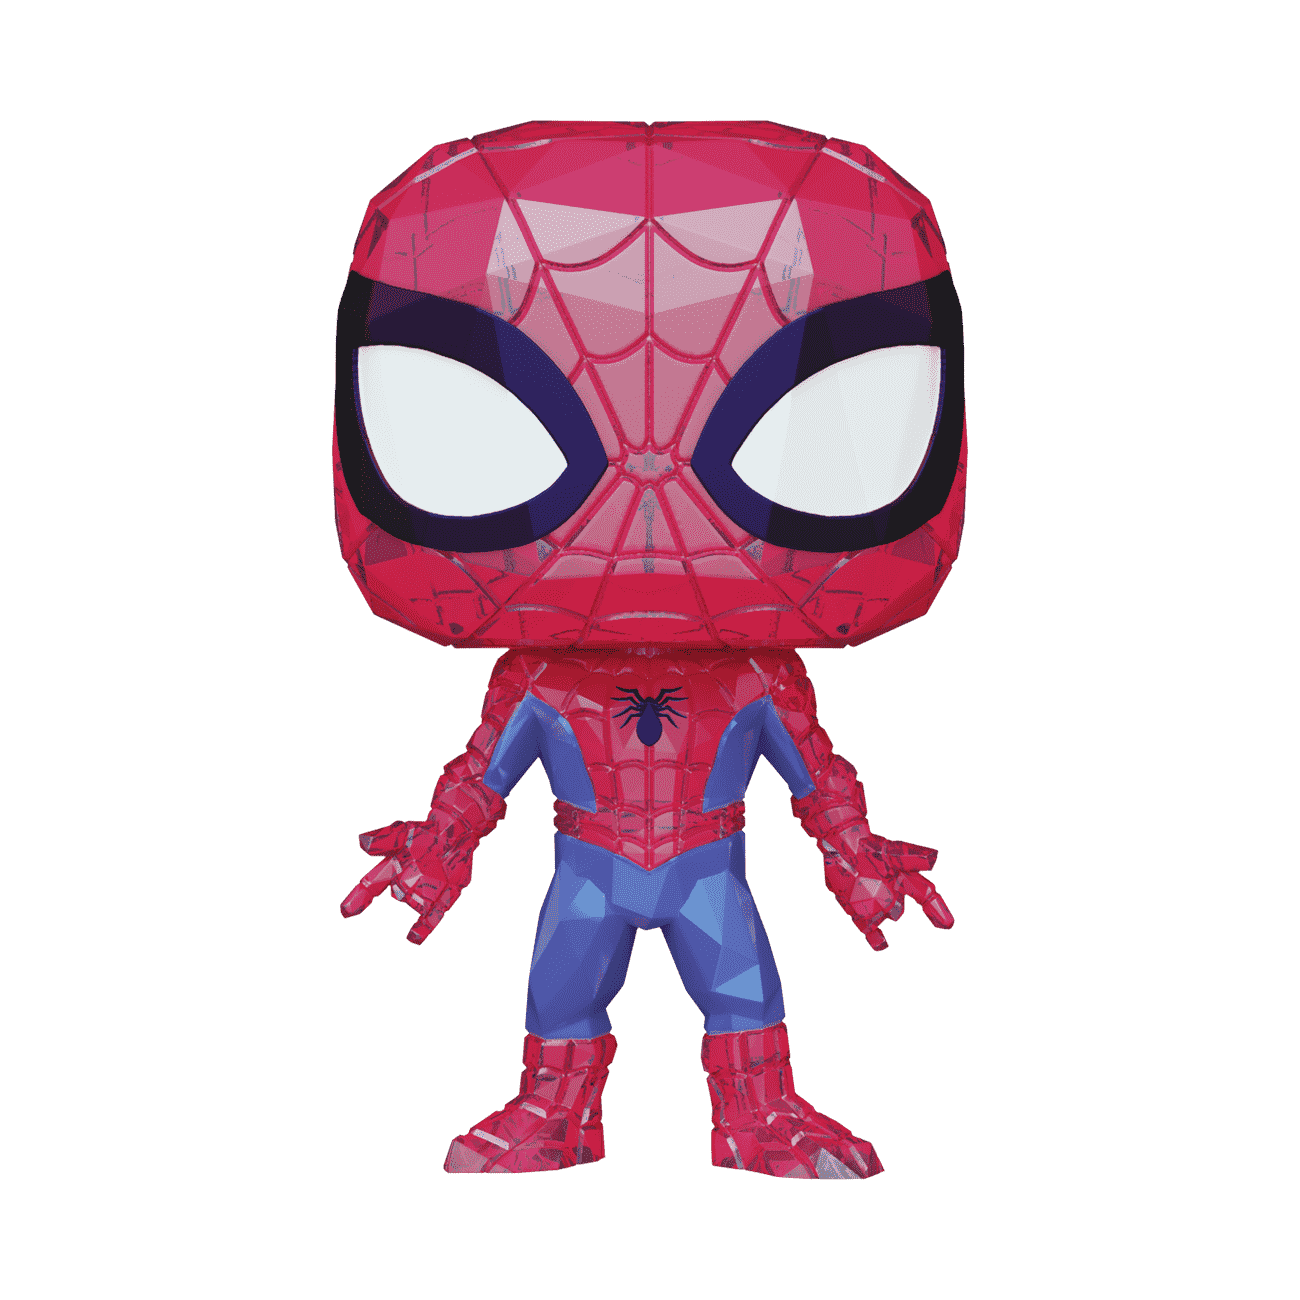 Buy Pop! Spider-Man at Funko.